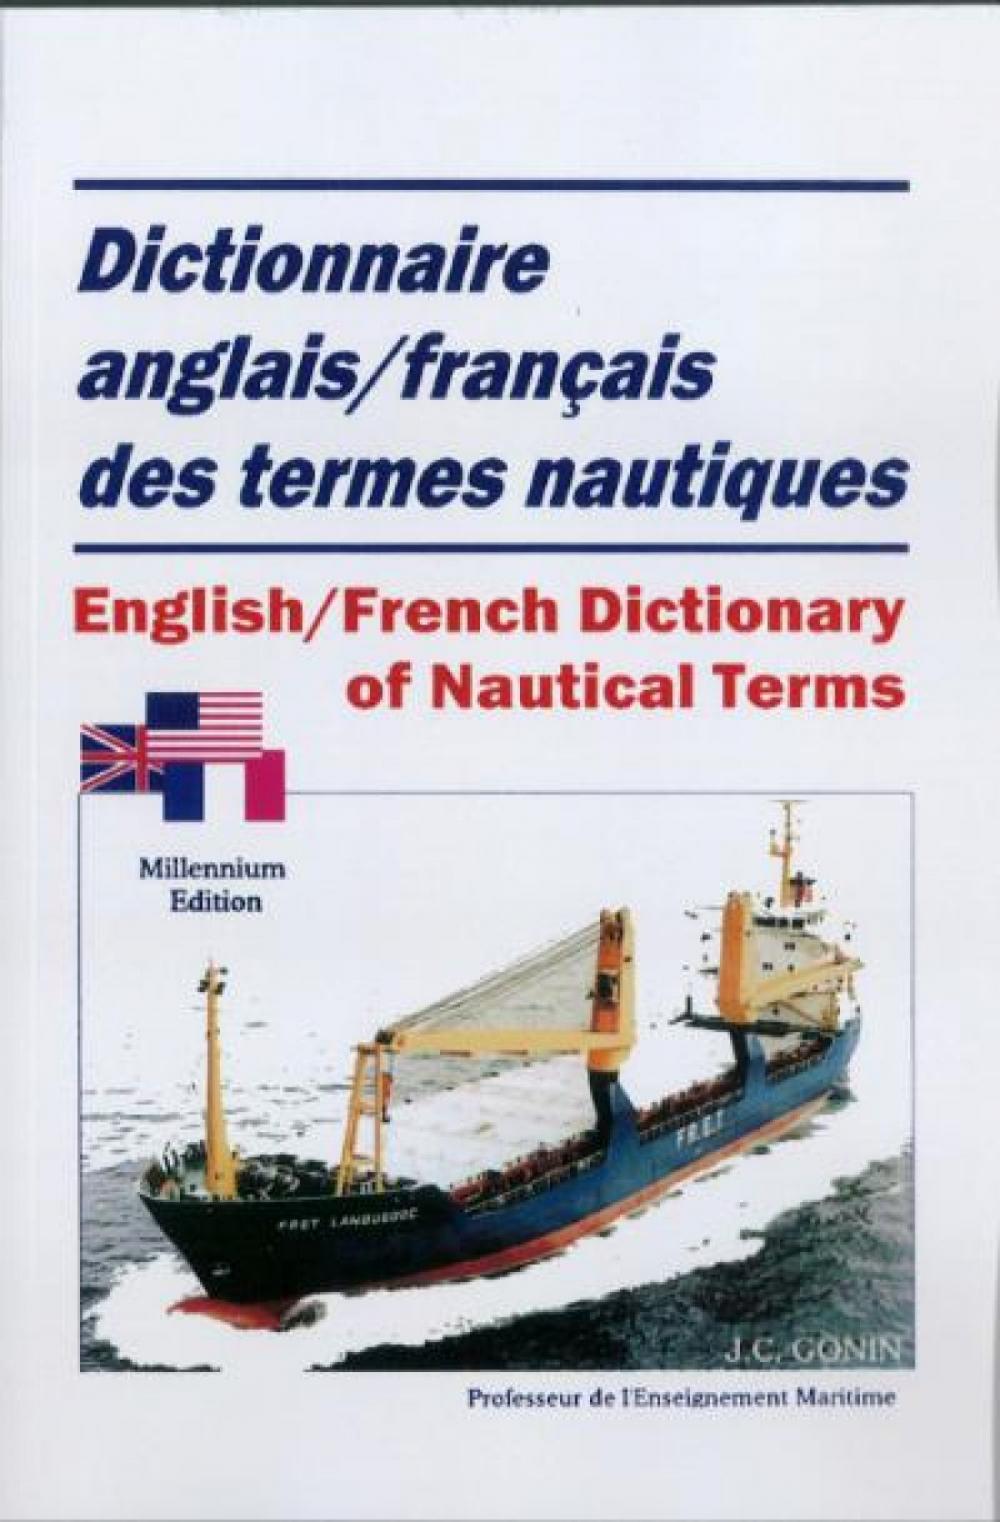 Dictionnaire anglais francais des termes nautiques / english french dictionary of nautical terms